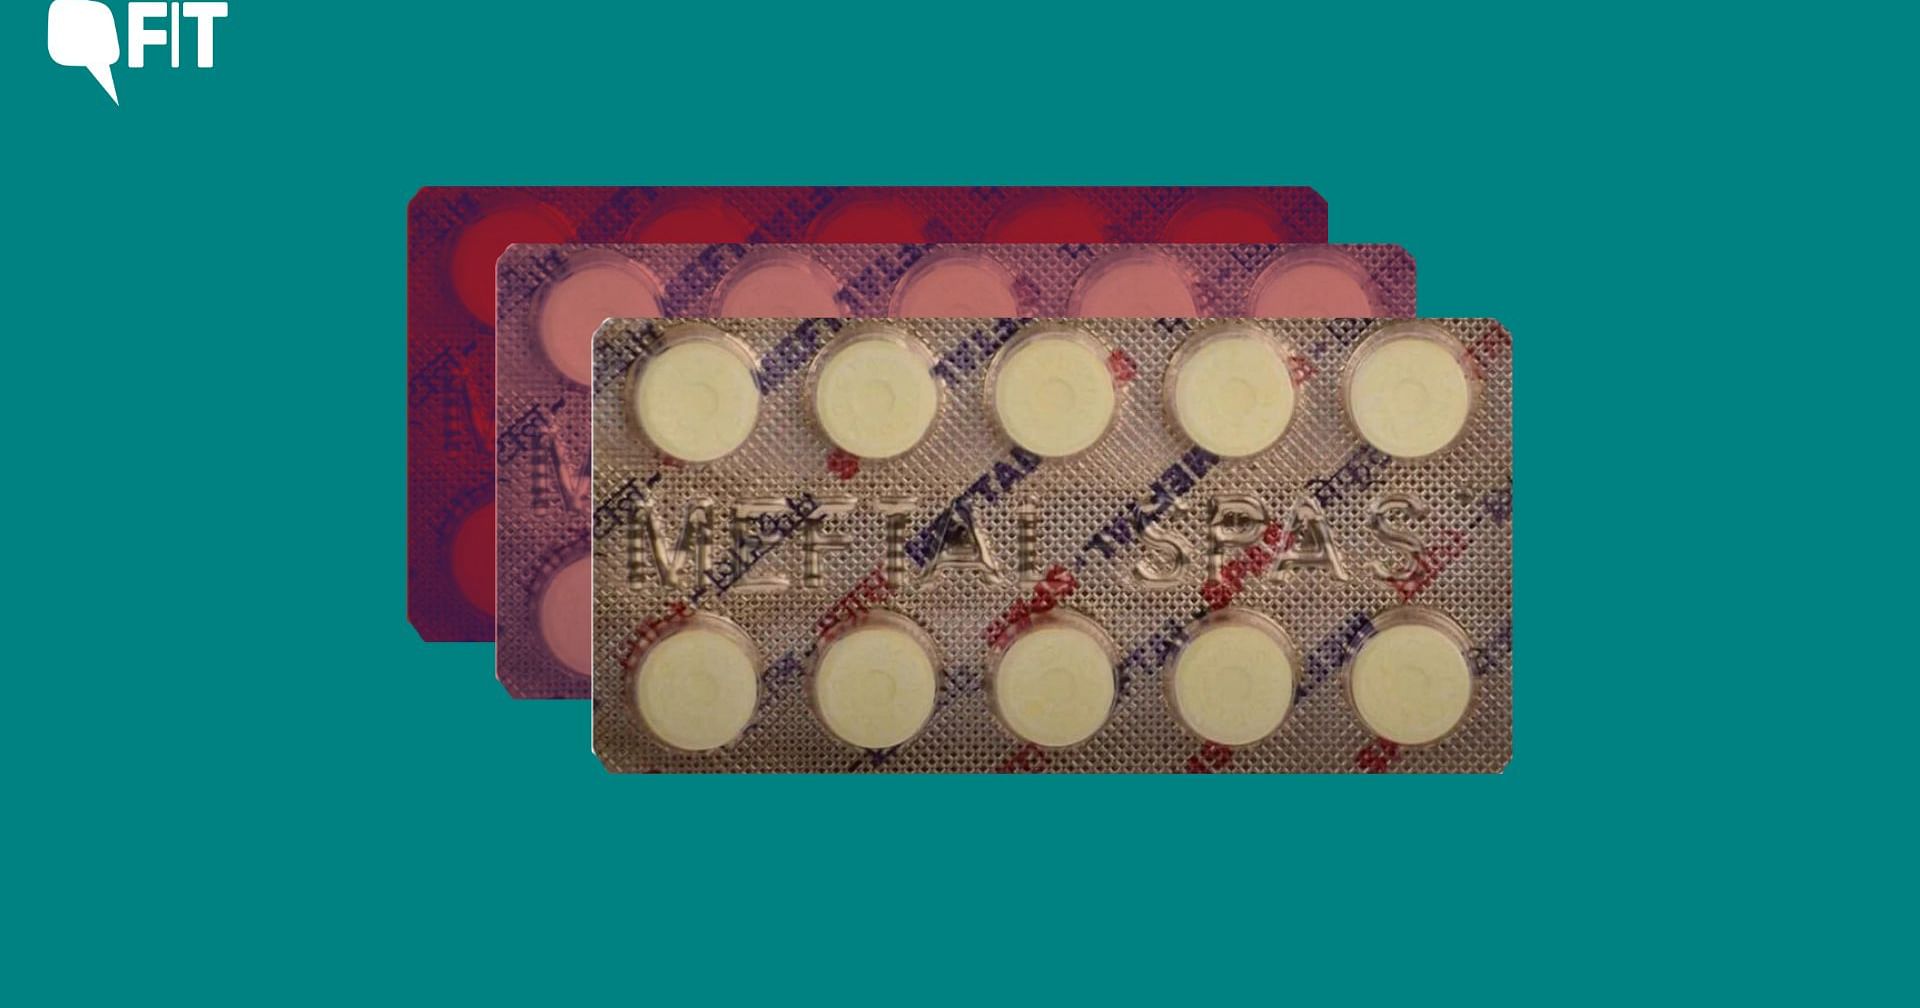 Painkiller Meftal Spas Can Cause ‘Adverse Reaction’, Says Govt Alert